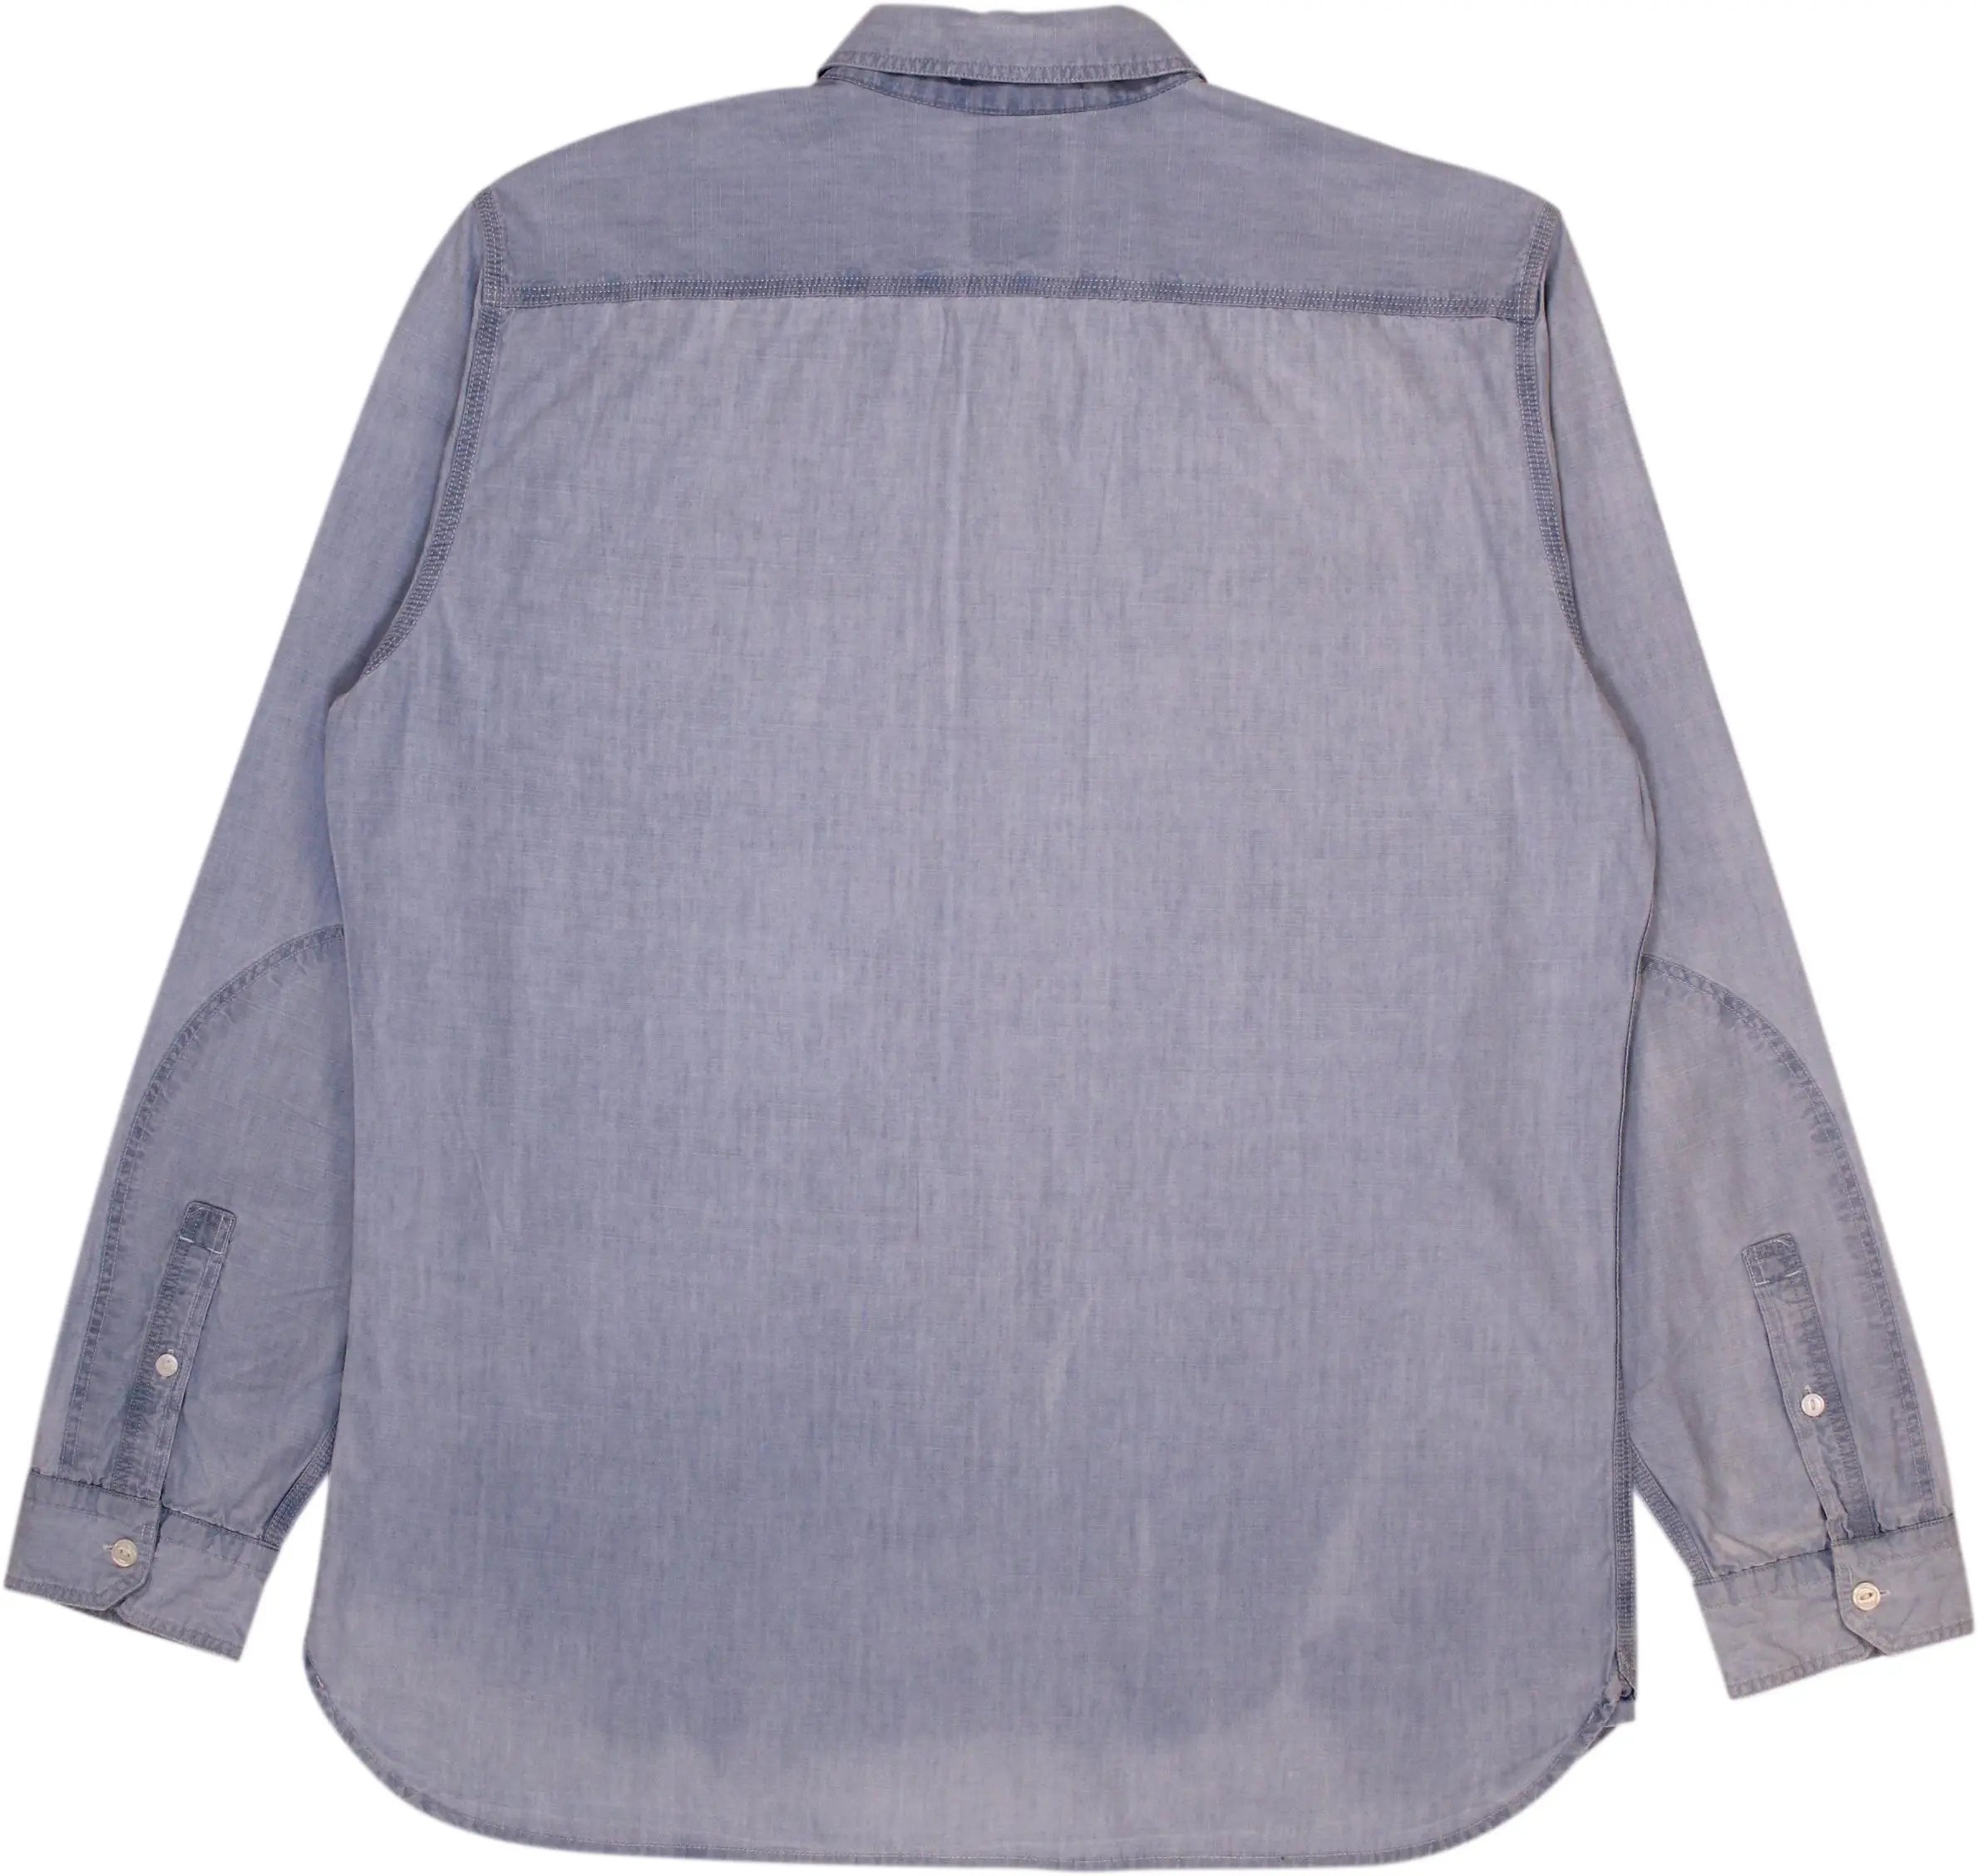 Levi's - Levi's Denim Shirt- ThriftTale.com - Vintage and second handclothing